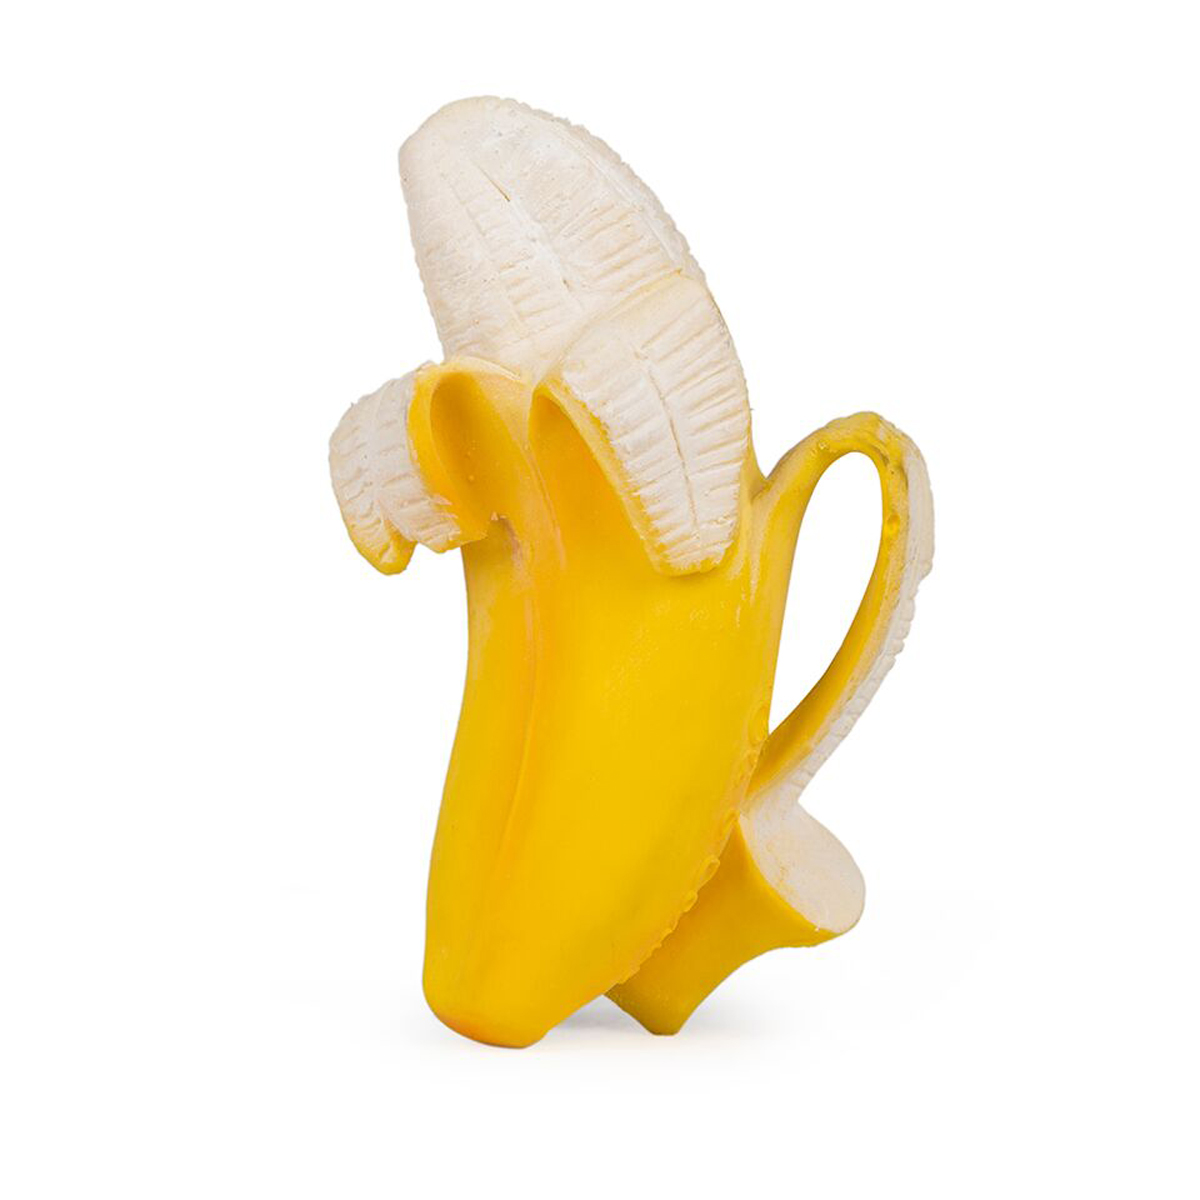 Jouet de dentition Ana la banane